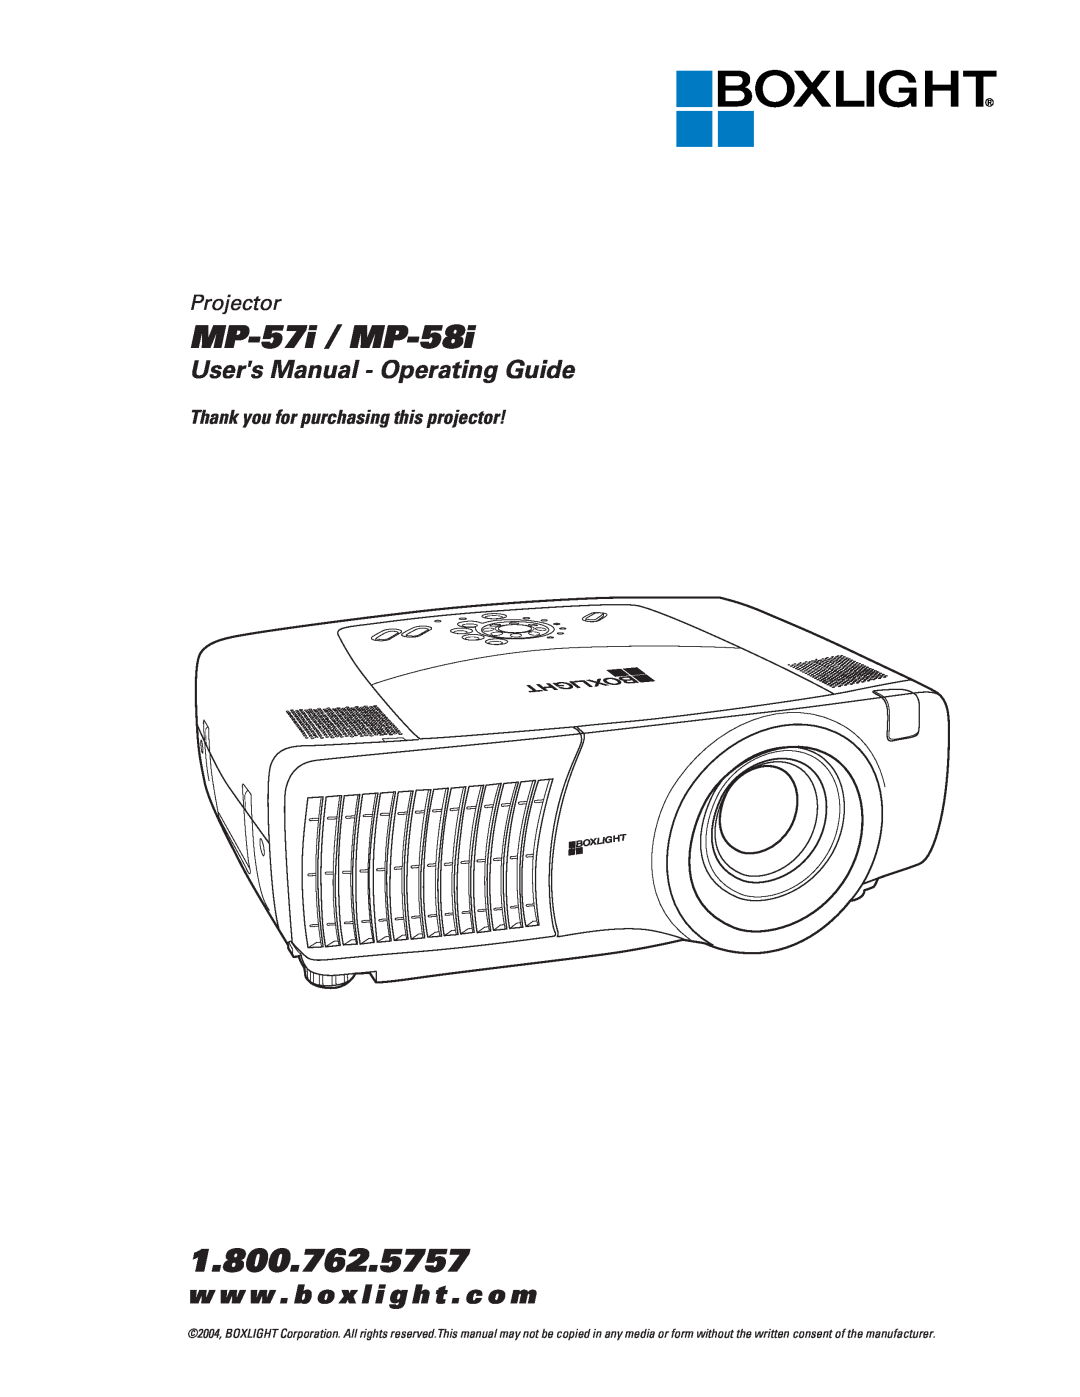 BOXLIGHT user manual MP-57i / MP-58i, 1.800.762.5757, Users Manual - Operating Guide, Projector 